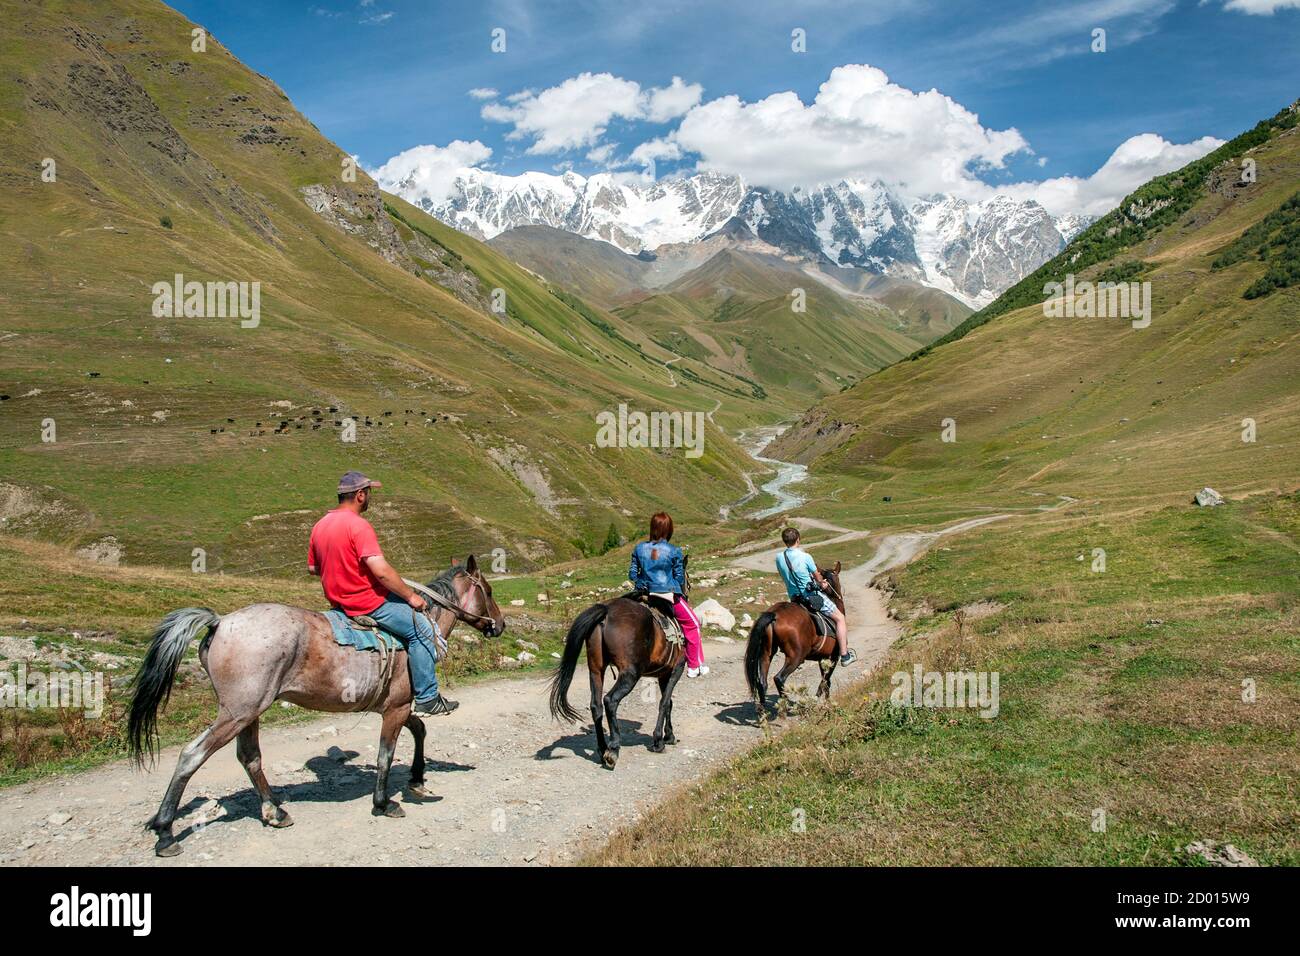 Horse riding in the foothills of Mount Shkhara (the highest mountain in Georgia), Svaneti region, Caucasus mountains, Georgia. Stock Photo